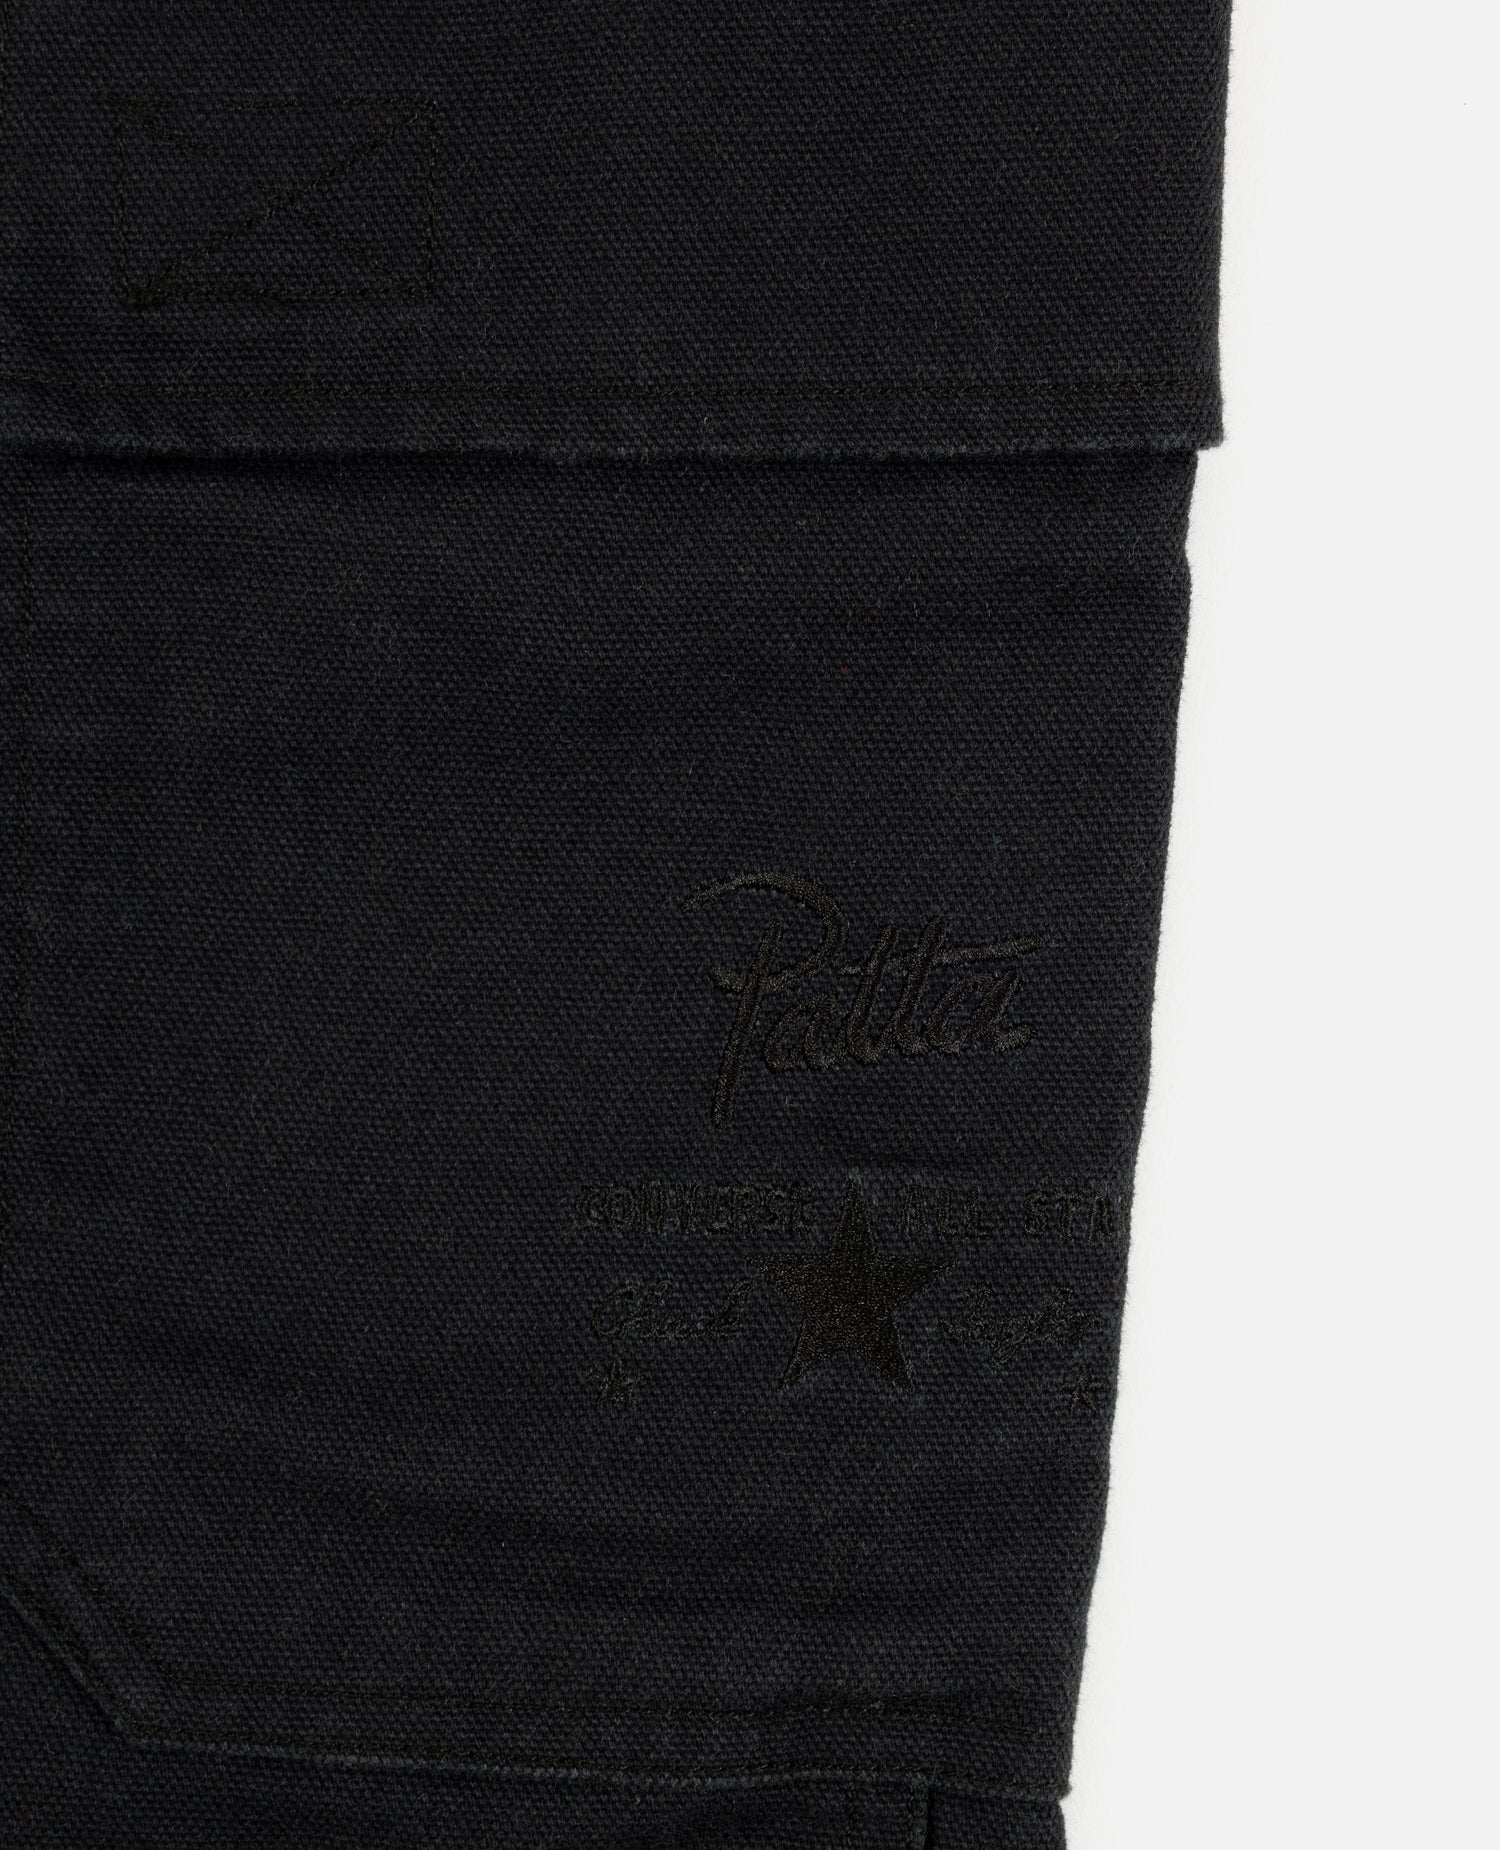 Patta x Converse 4 Leaf Clover Cargo Pants (Black)